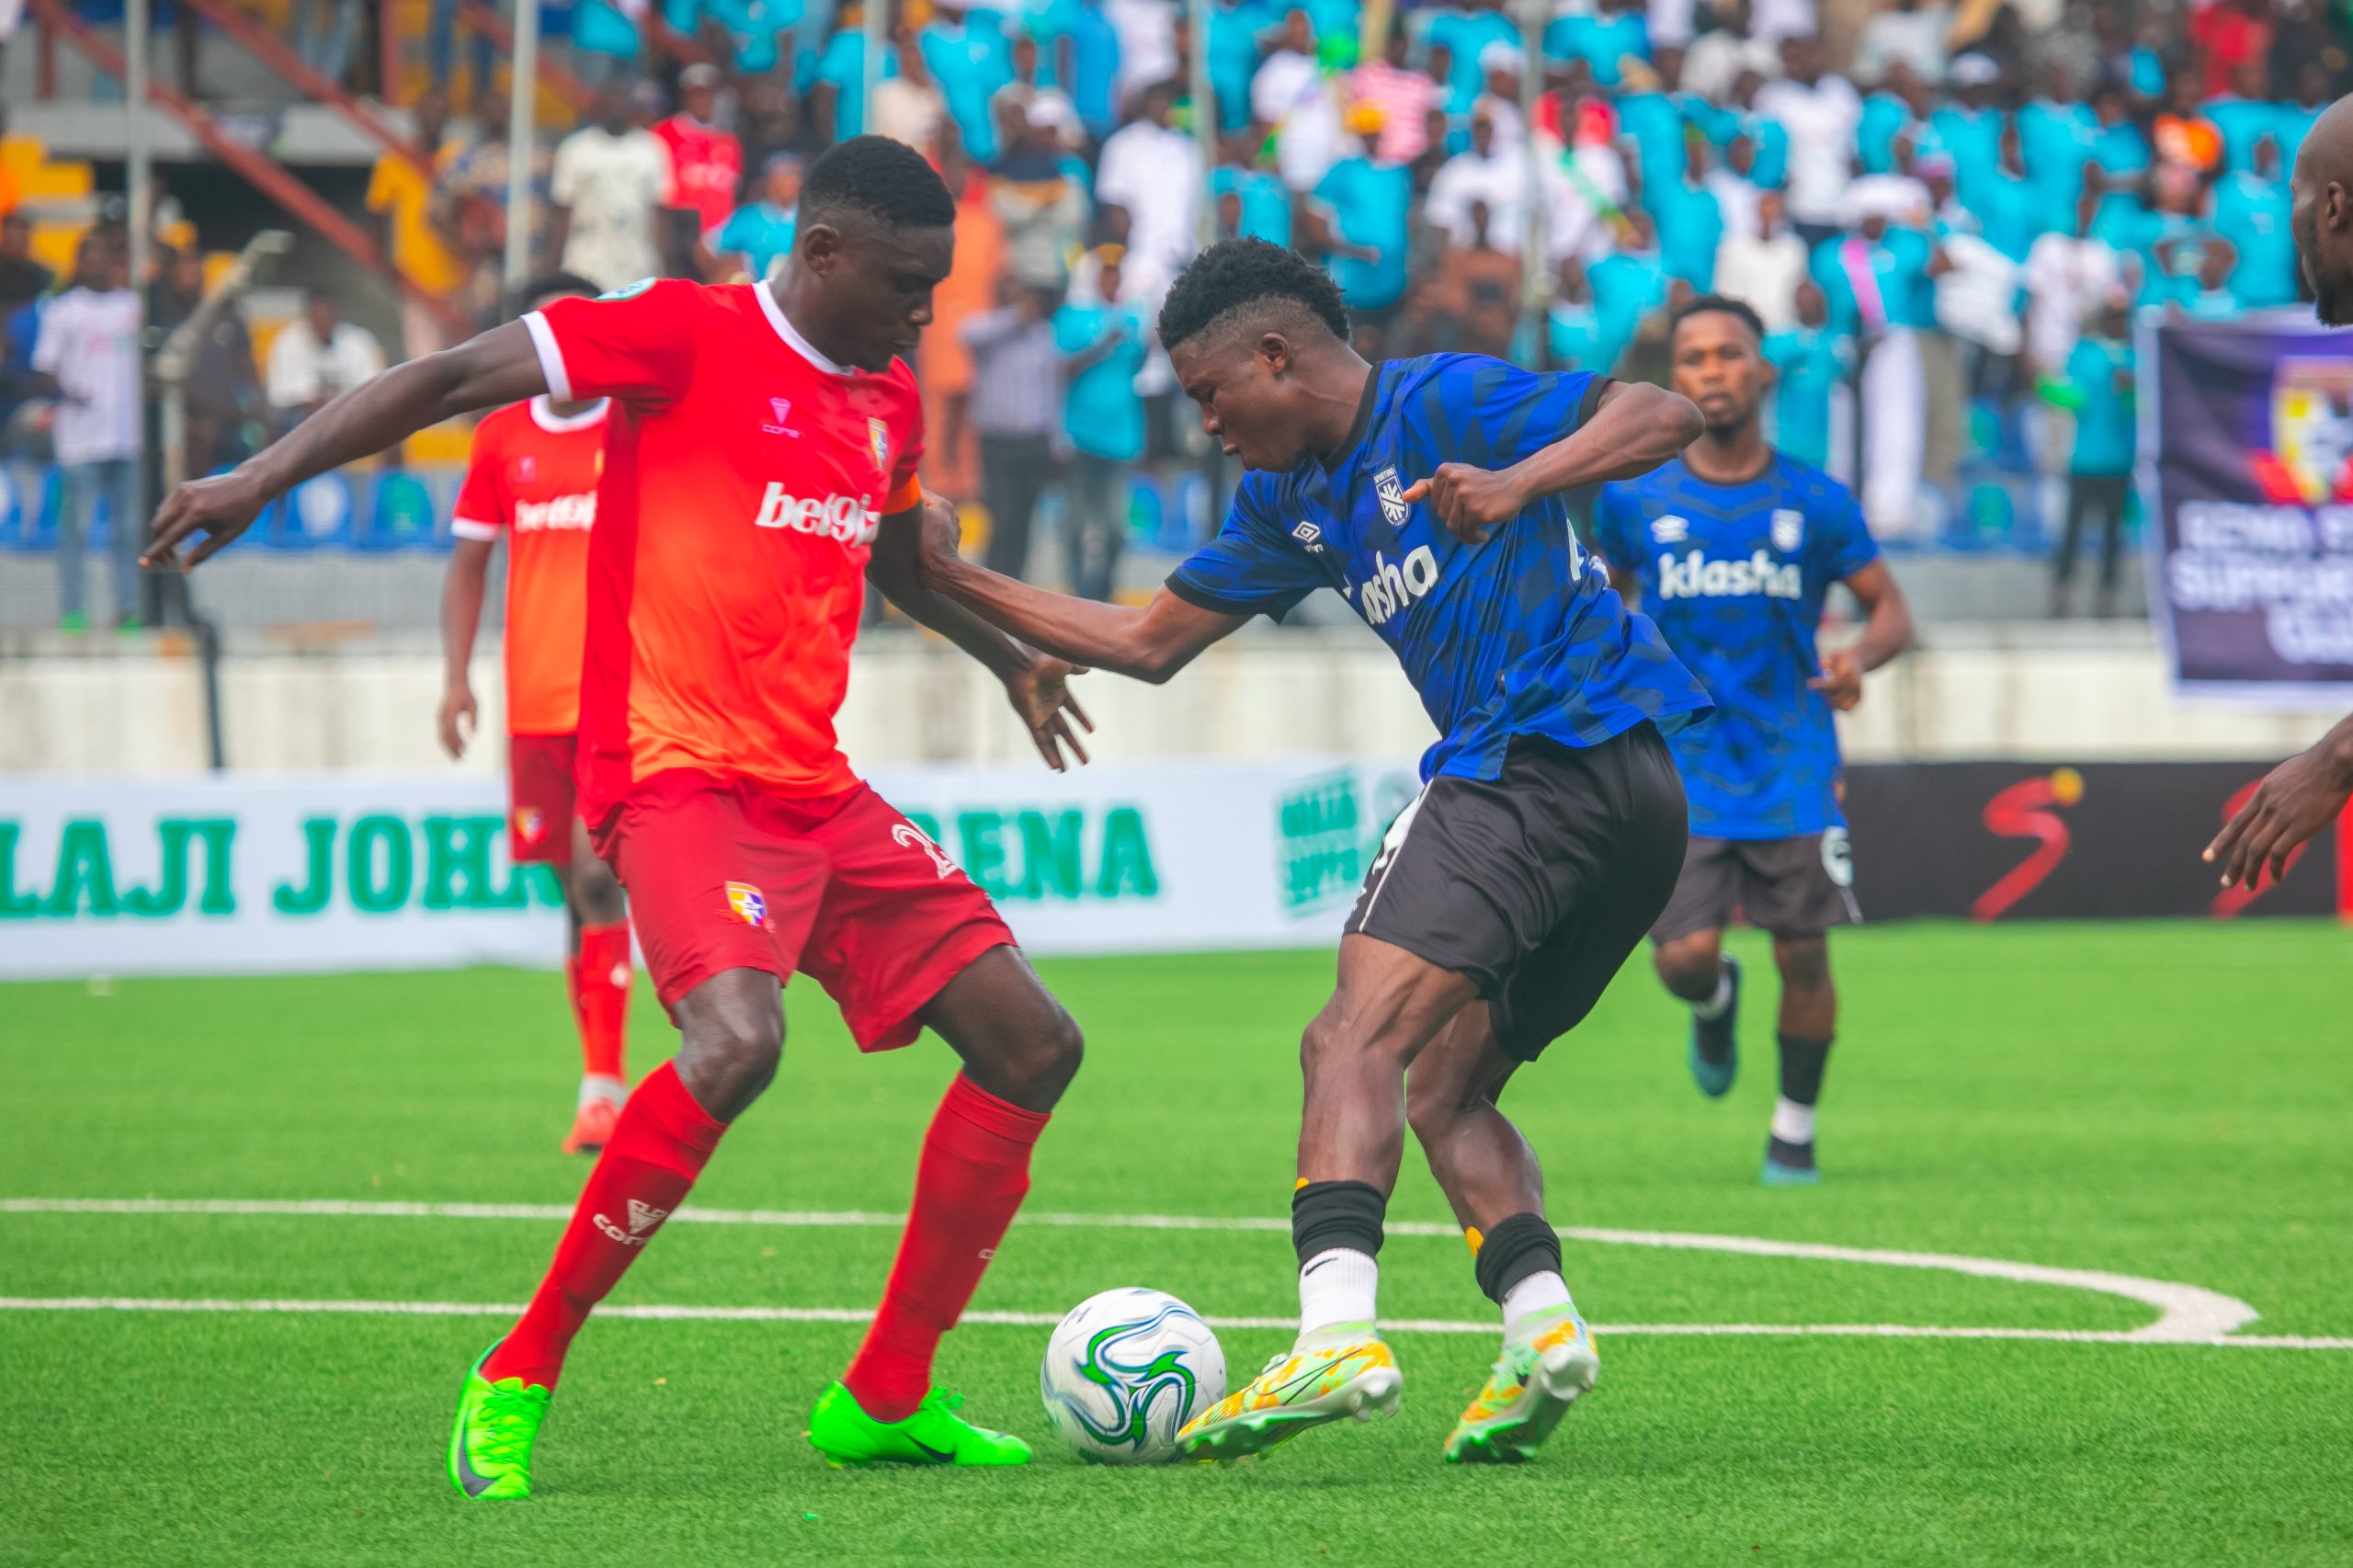 Nduka(Remo Stars) and Rivio(Sporting Lagos) - Photo Credit: Adelase Jamiu